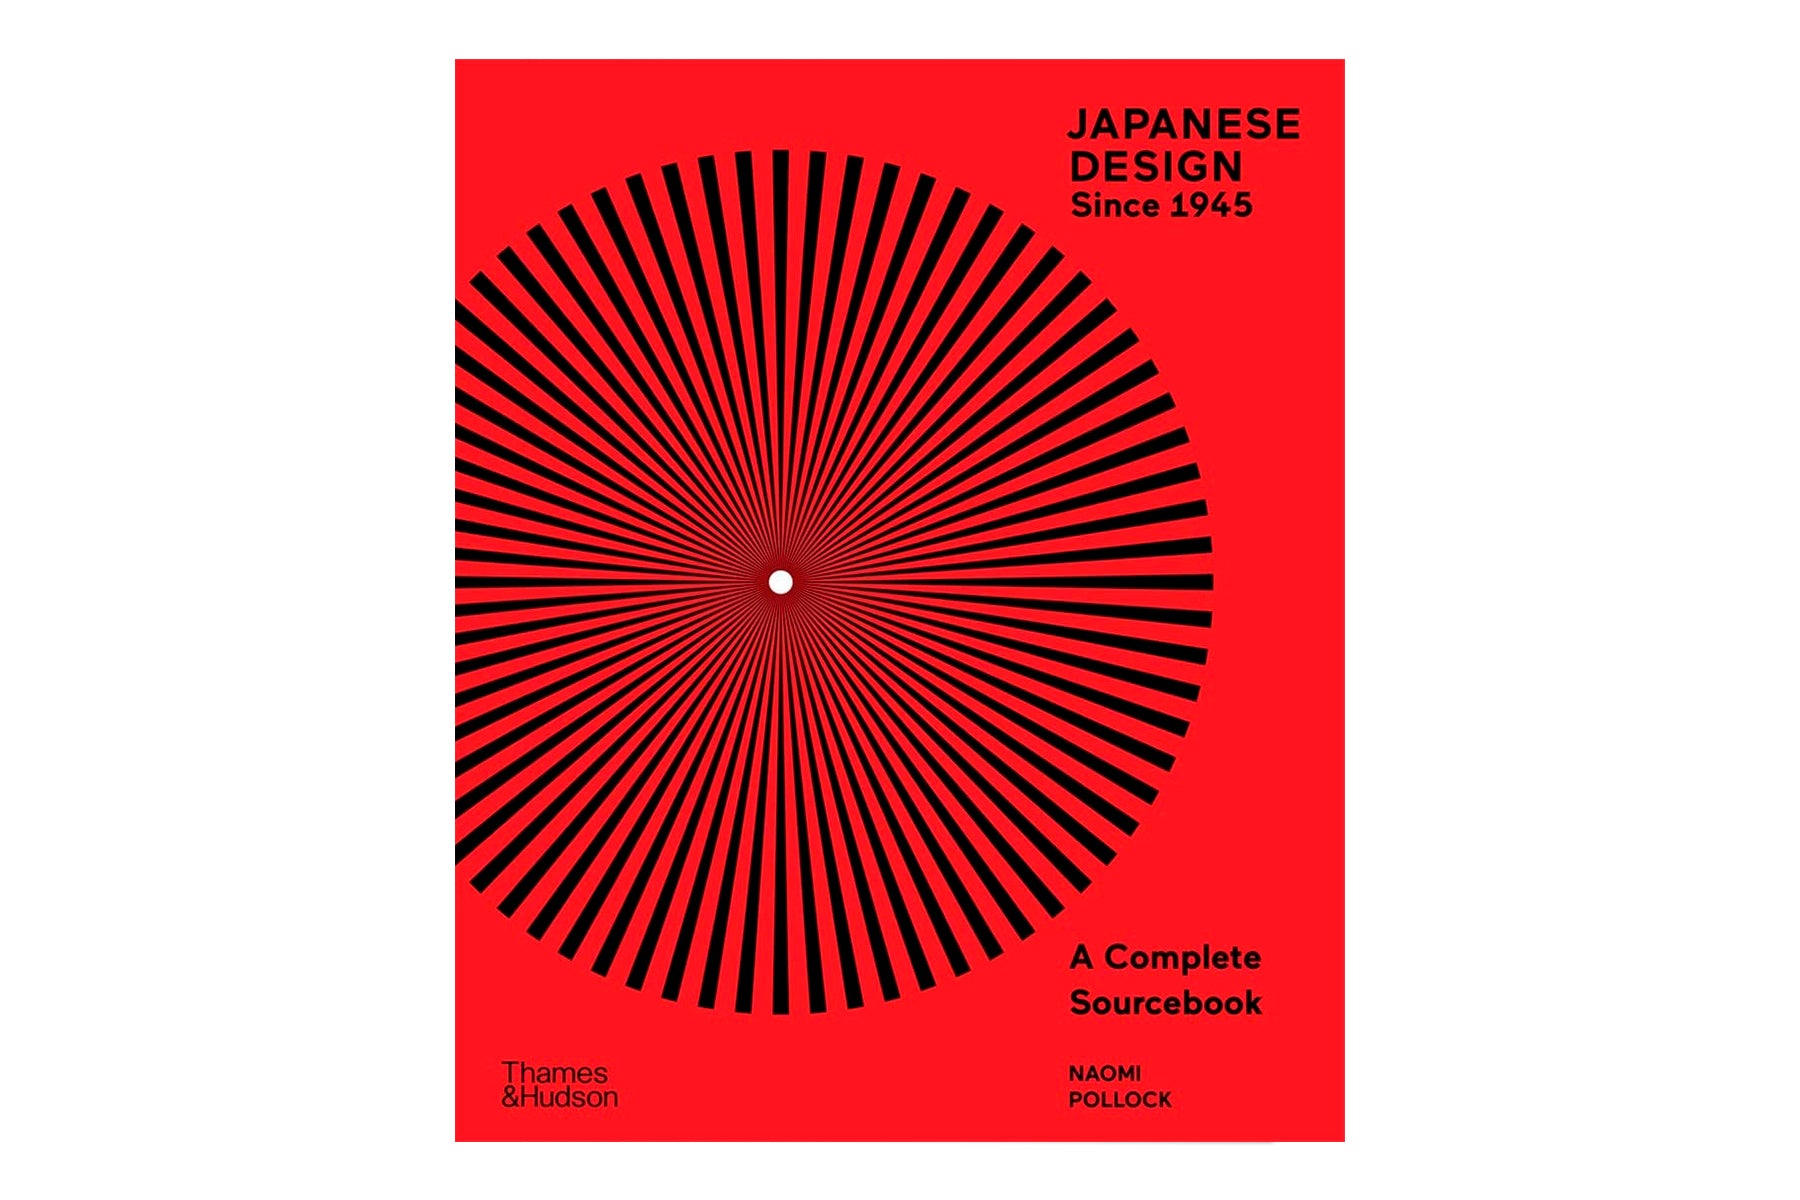 JAPANESE DESIGN Since 1945 - A Complete Sourcebook